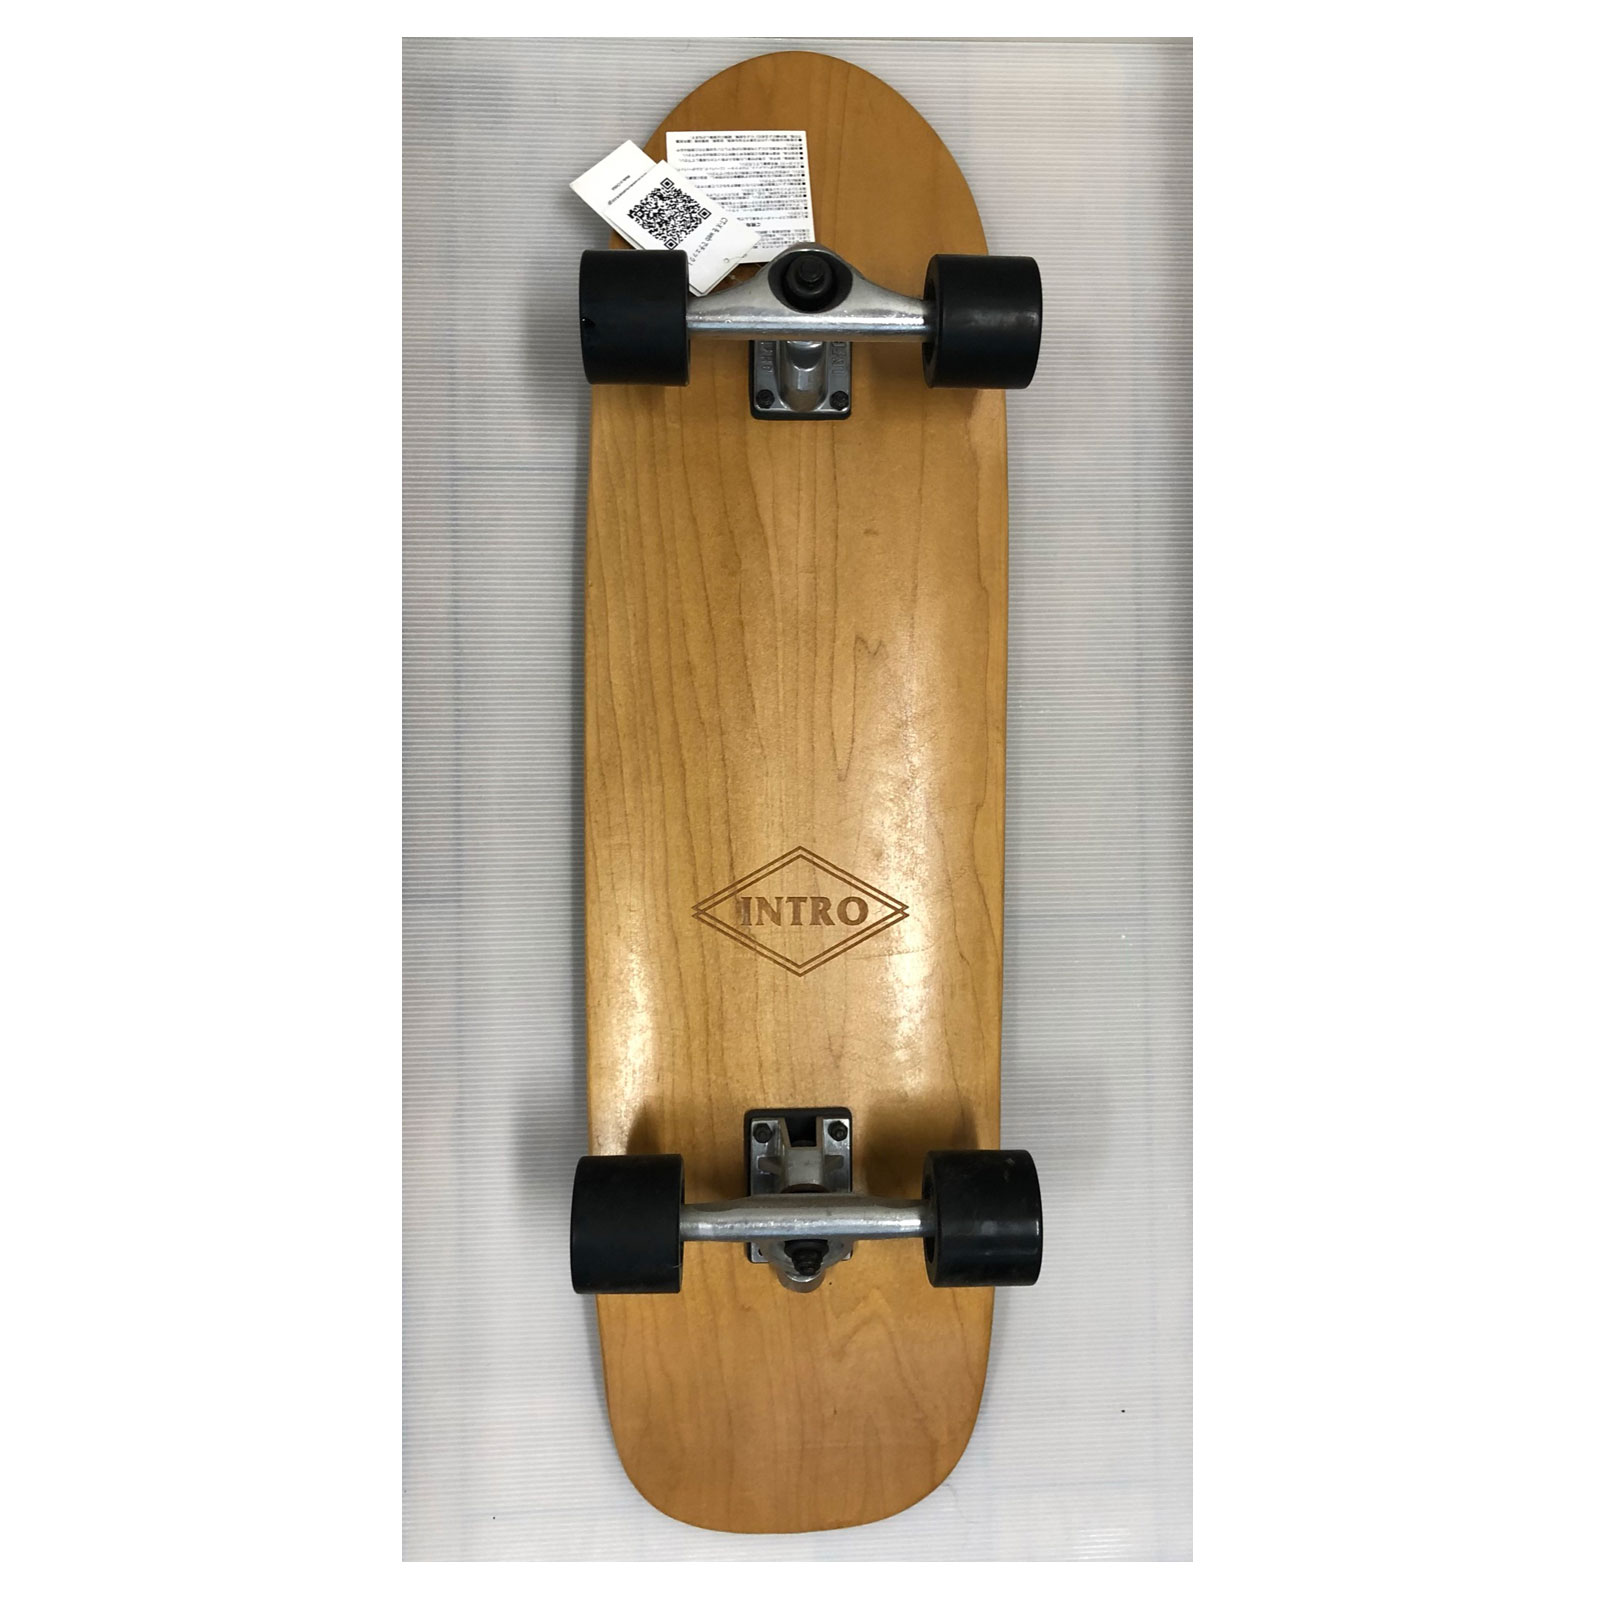 INTRO skateboard CT-Xモデル 34inch